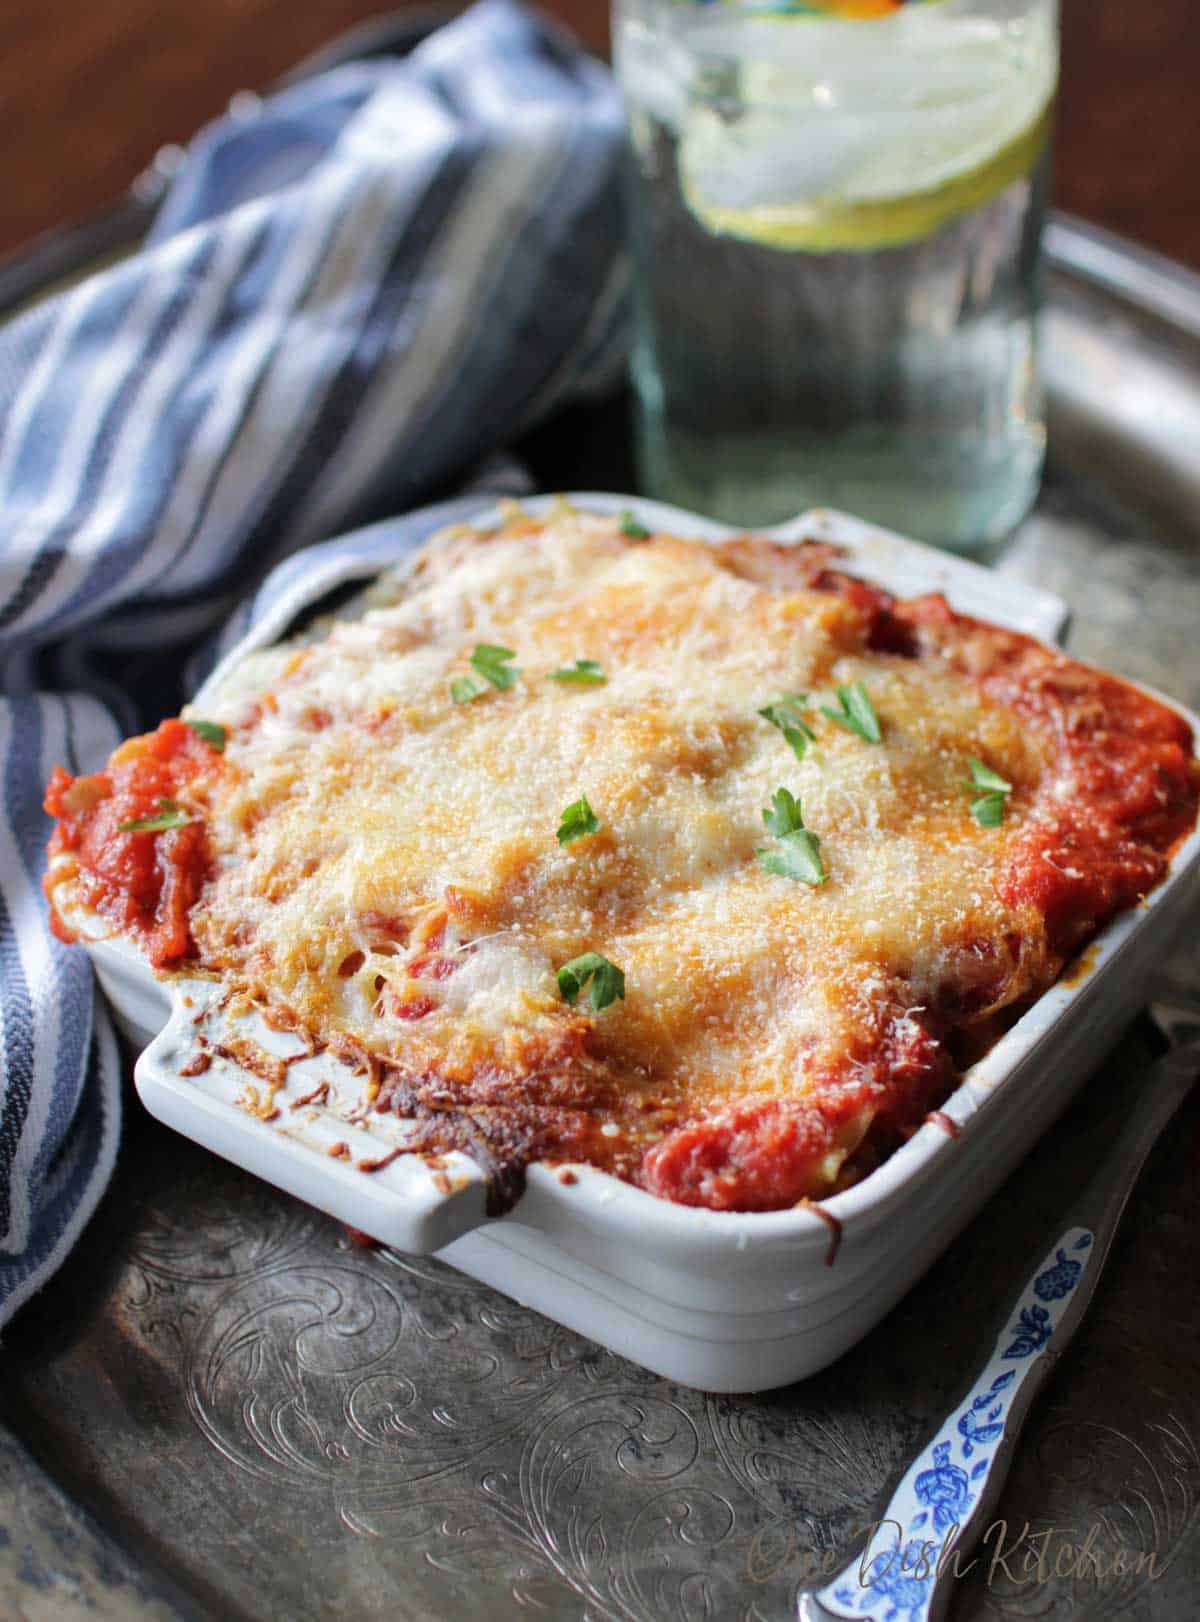 https://onedishkitchen.com/wp-content/uploads/2020/02/lasagna-one-dish-kitchen-1200-1.jpg